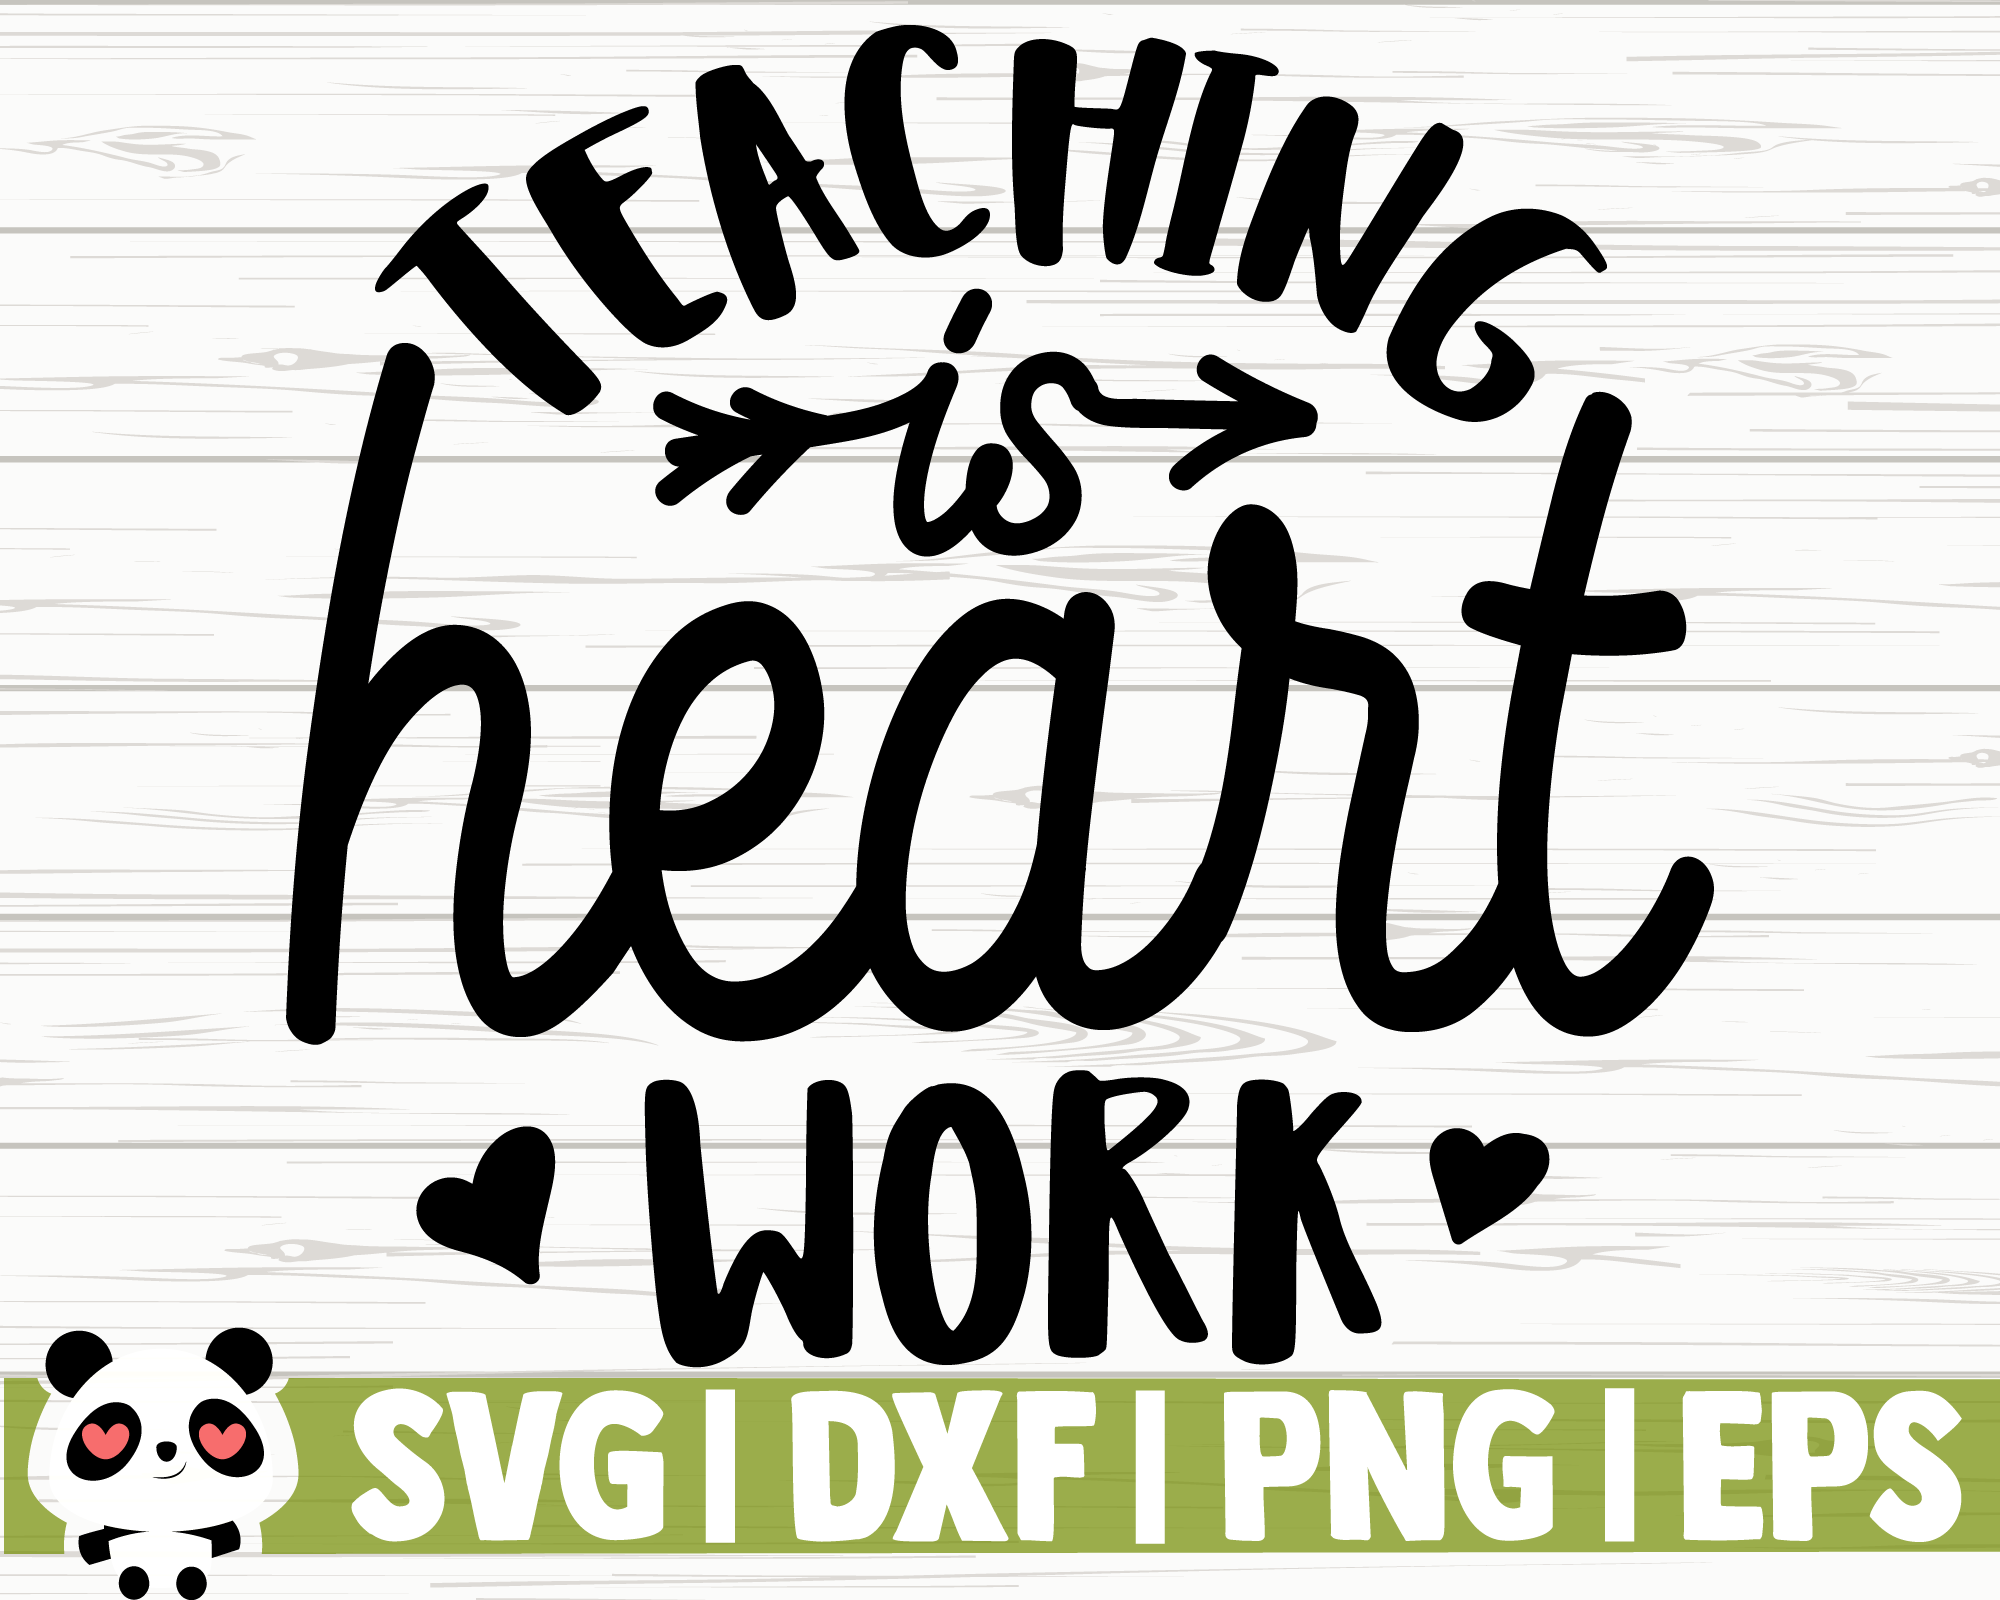 Teaching Is Heart Work By Creativedesignsllc Thehungryjpeg Com